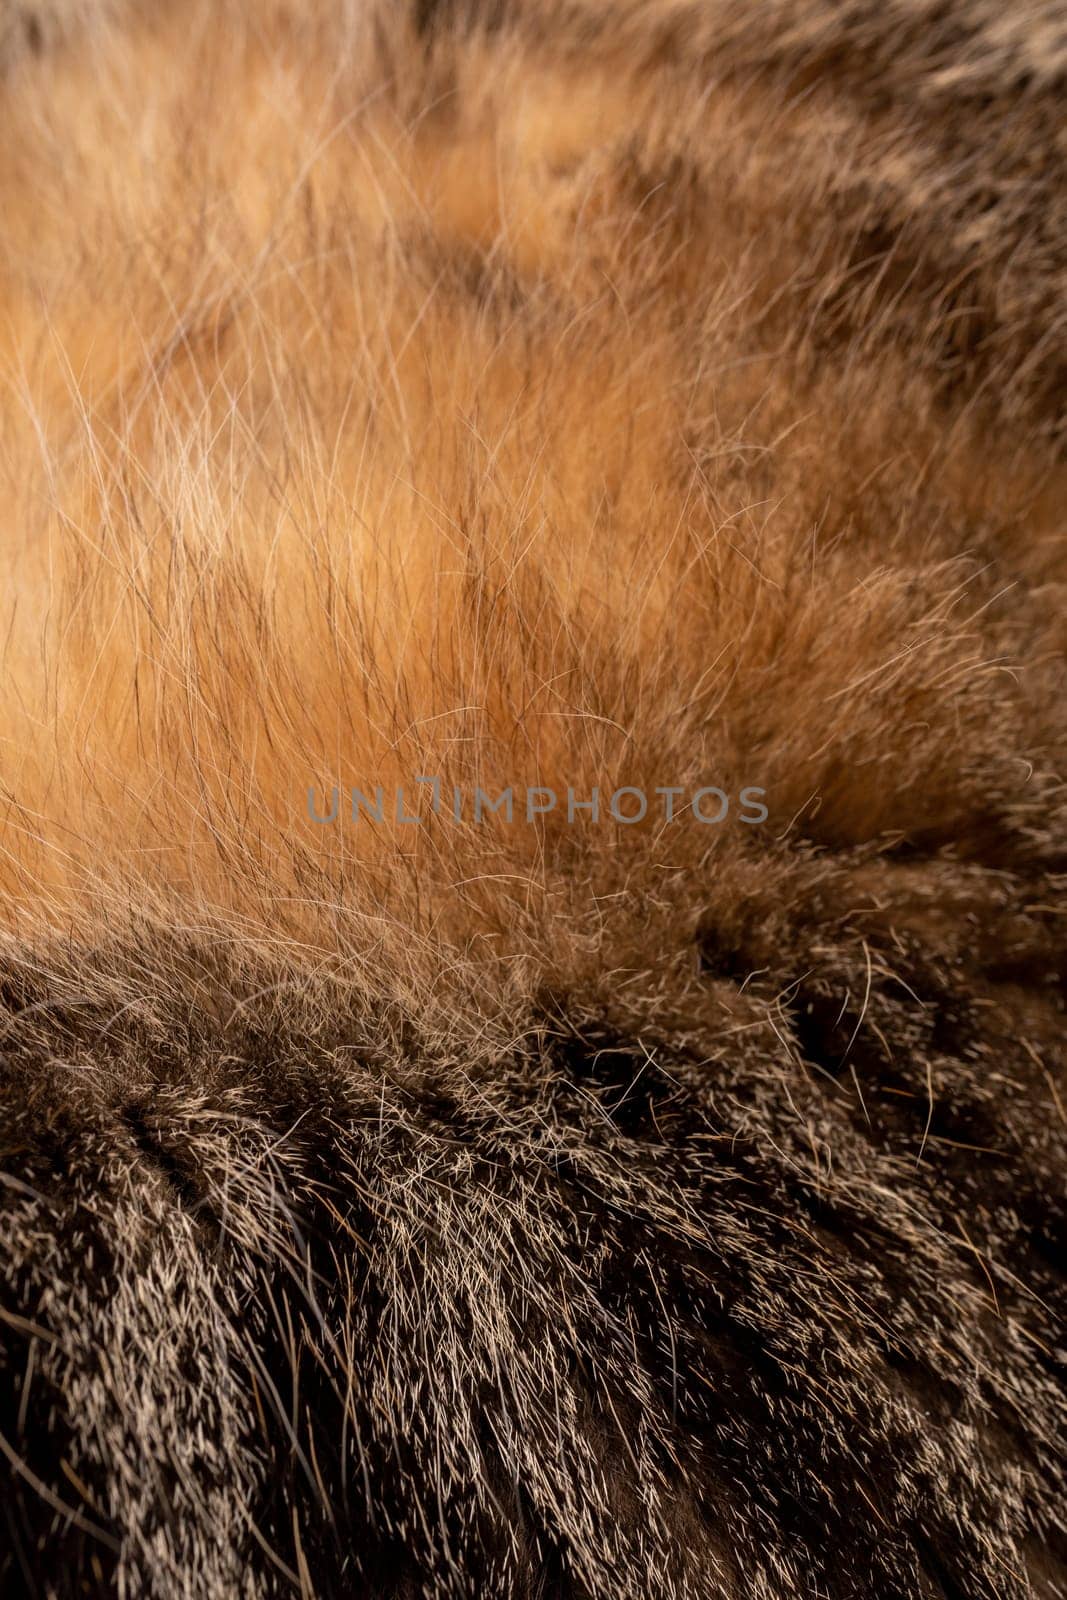 closeup cat fur looks like a volcano eruption, real photo